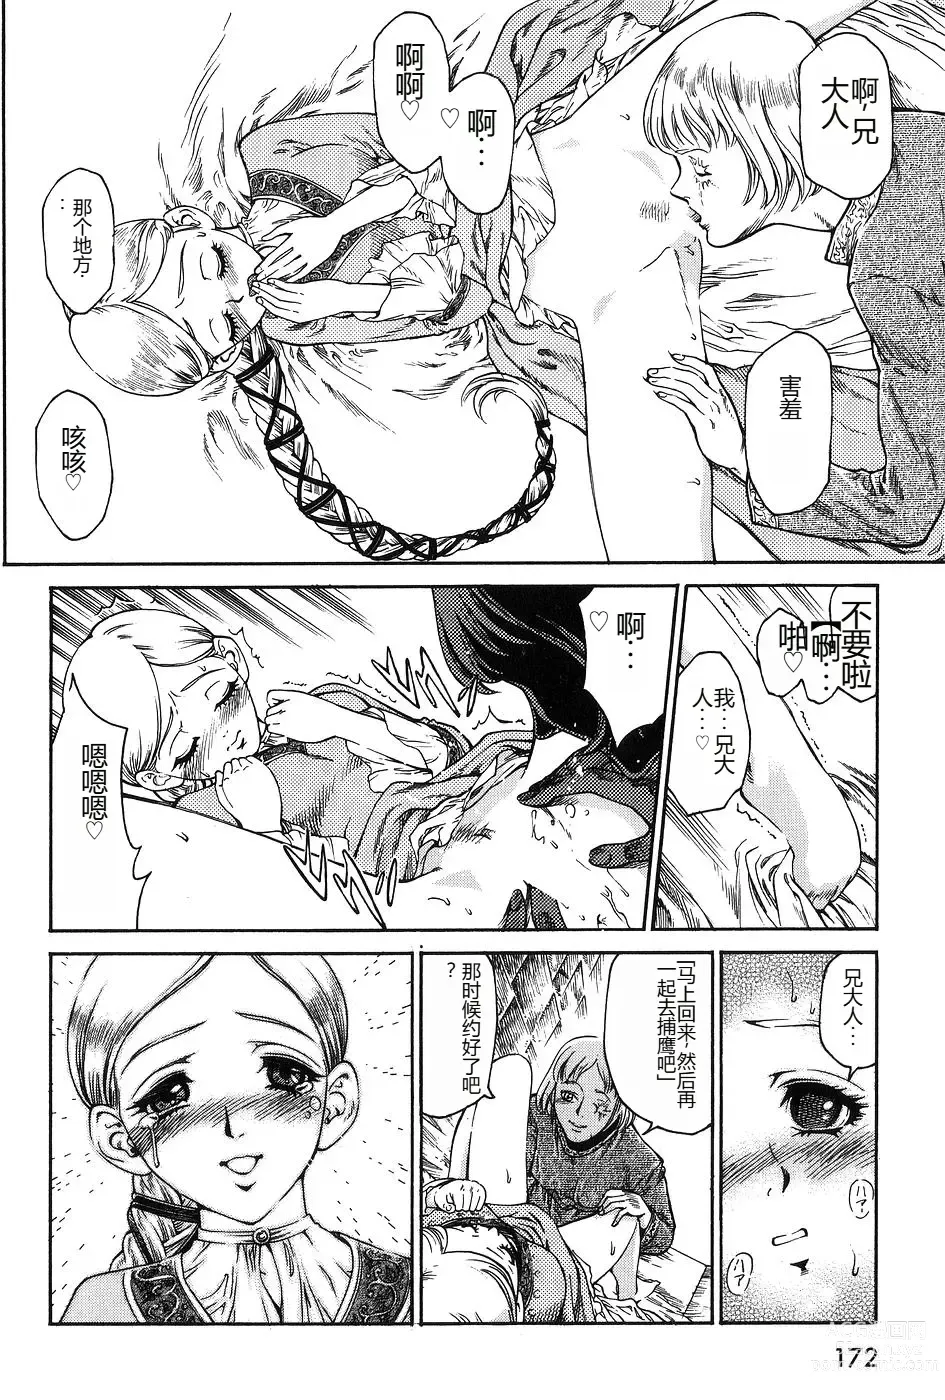 Page 174 of manga Dark Age